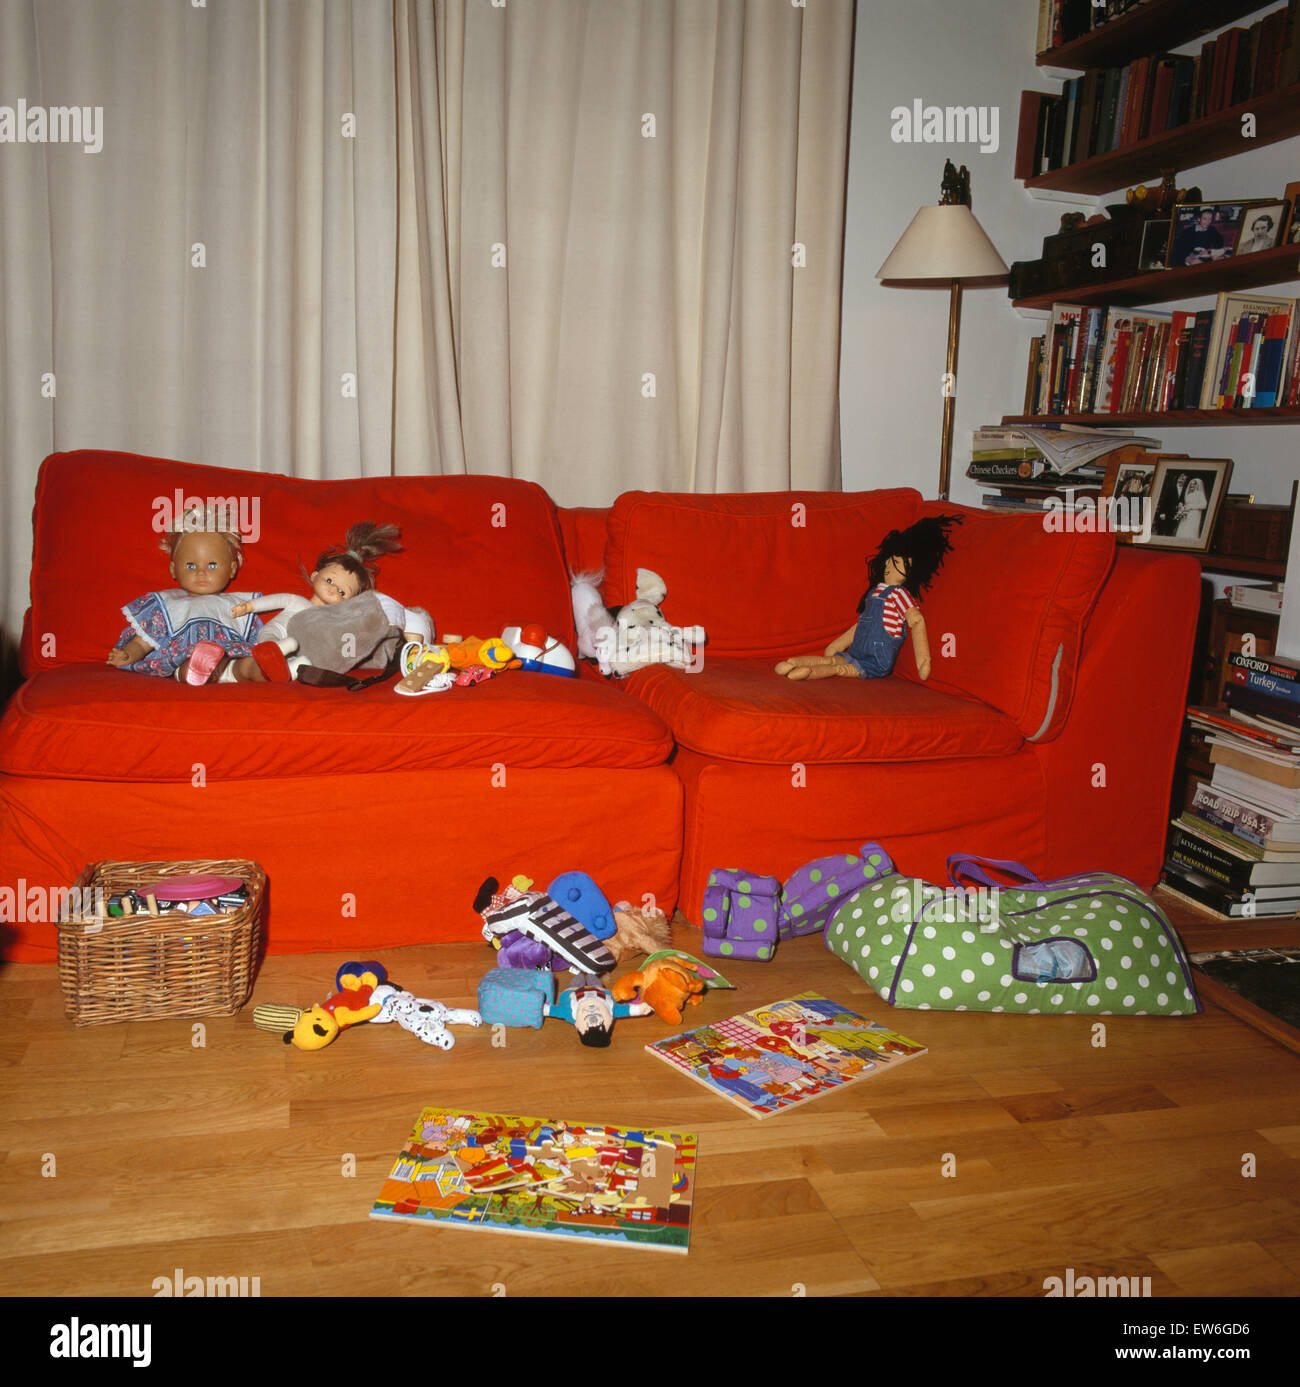 Toys on orange sofa and floor in children's untidy play room Stock Photo